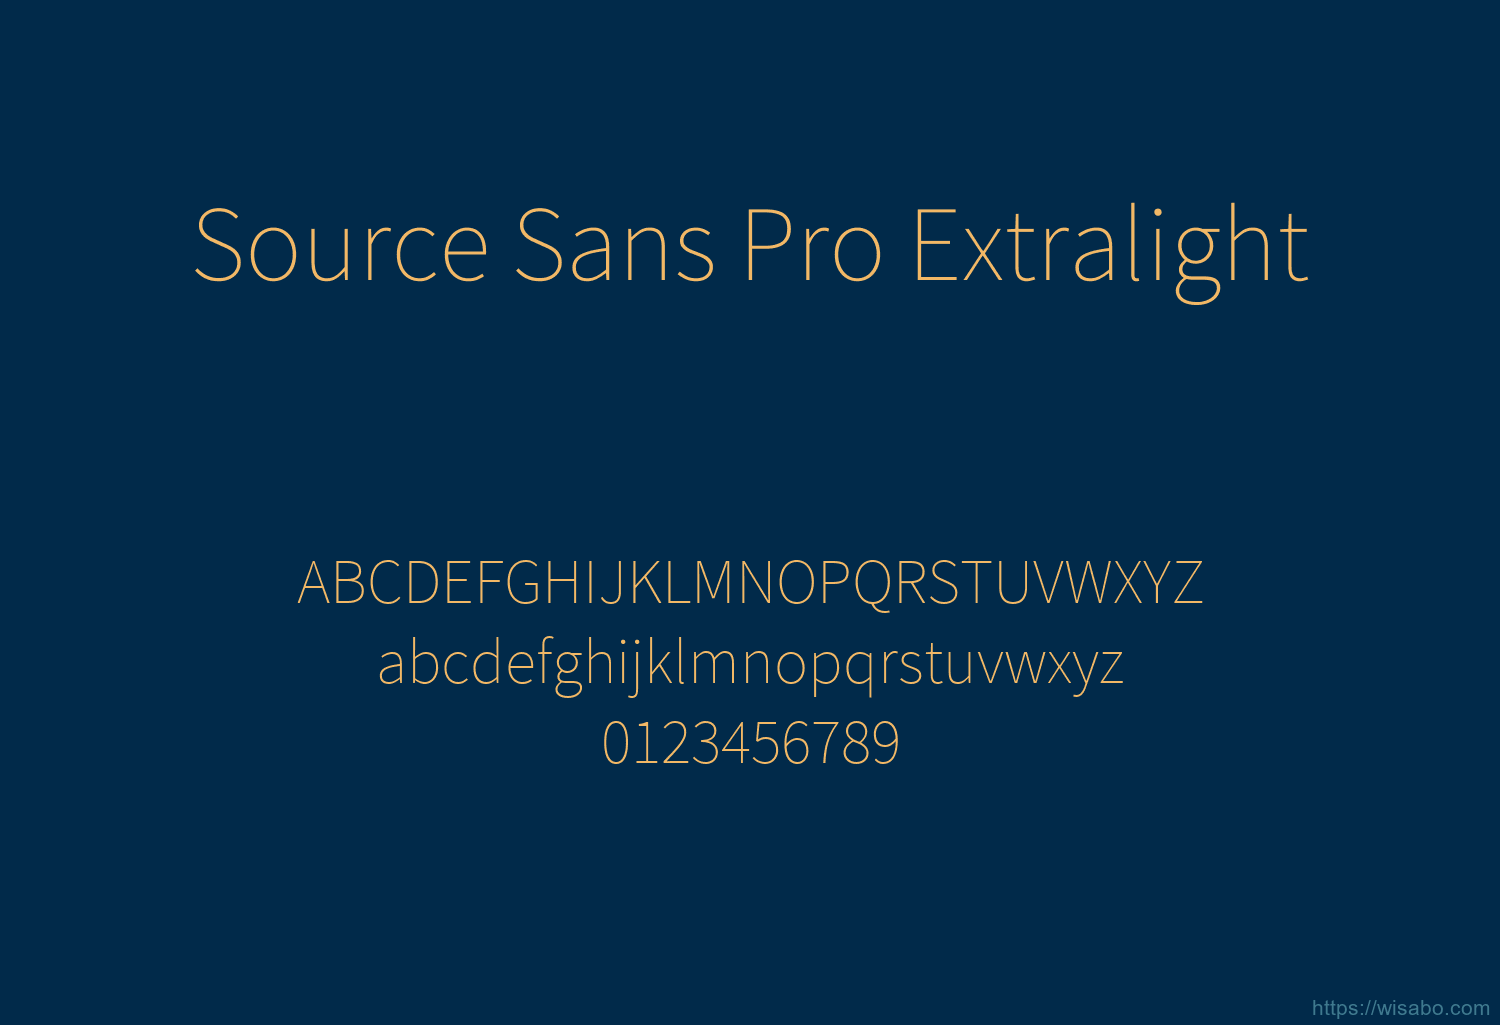 Source Sans Pro Extralight